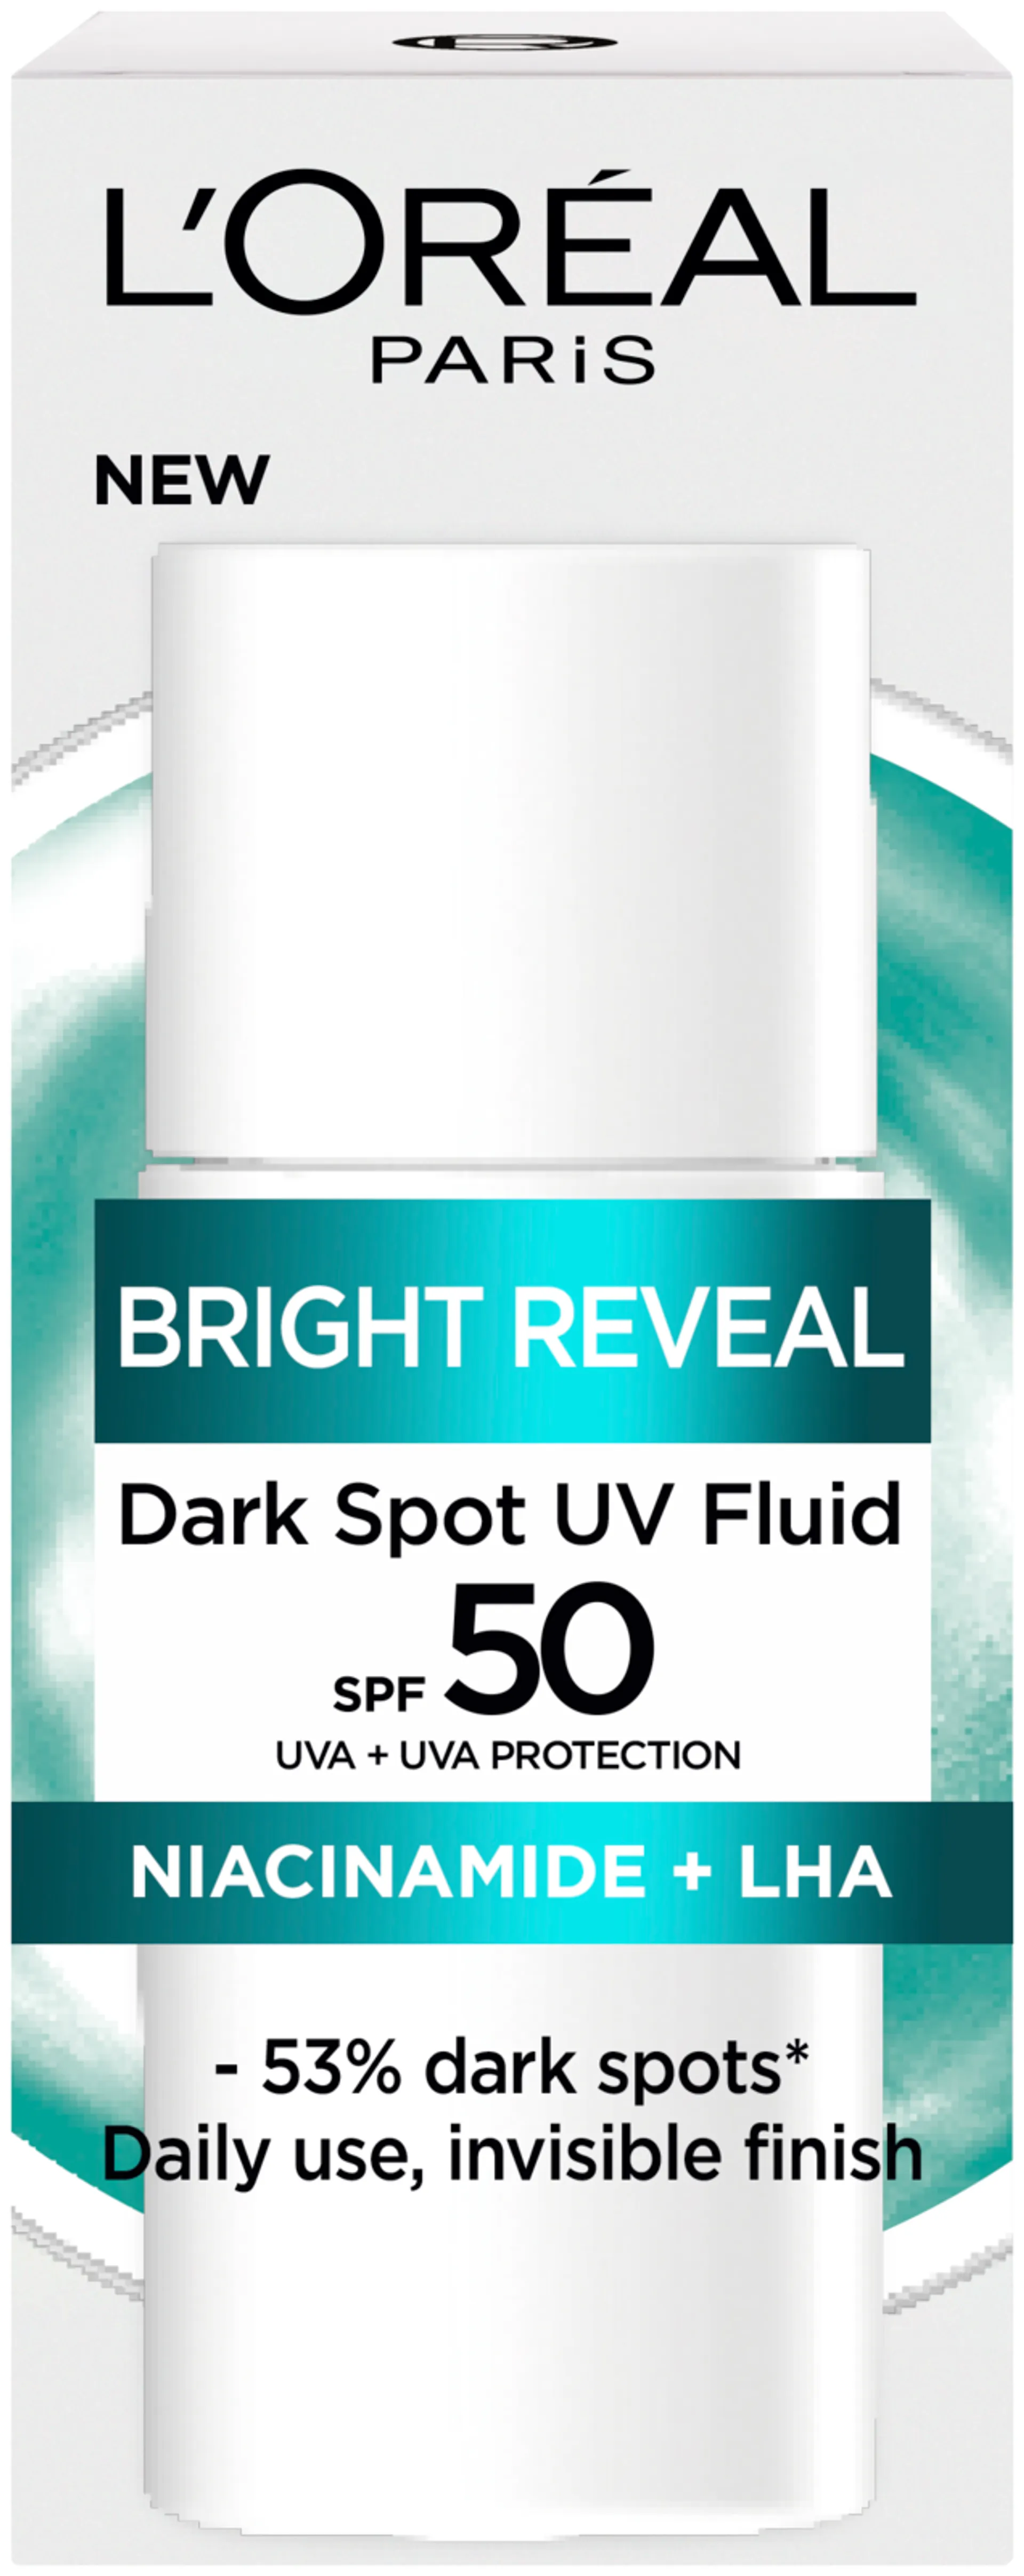 L'Oréal Paris Bright Reveal Niacinamide Dark Spot UV Lotion SK 50+ päivävoide 50ml - 2